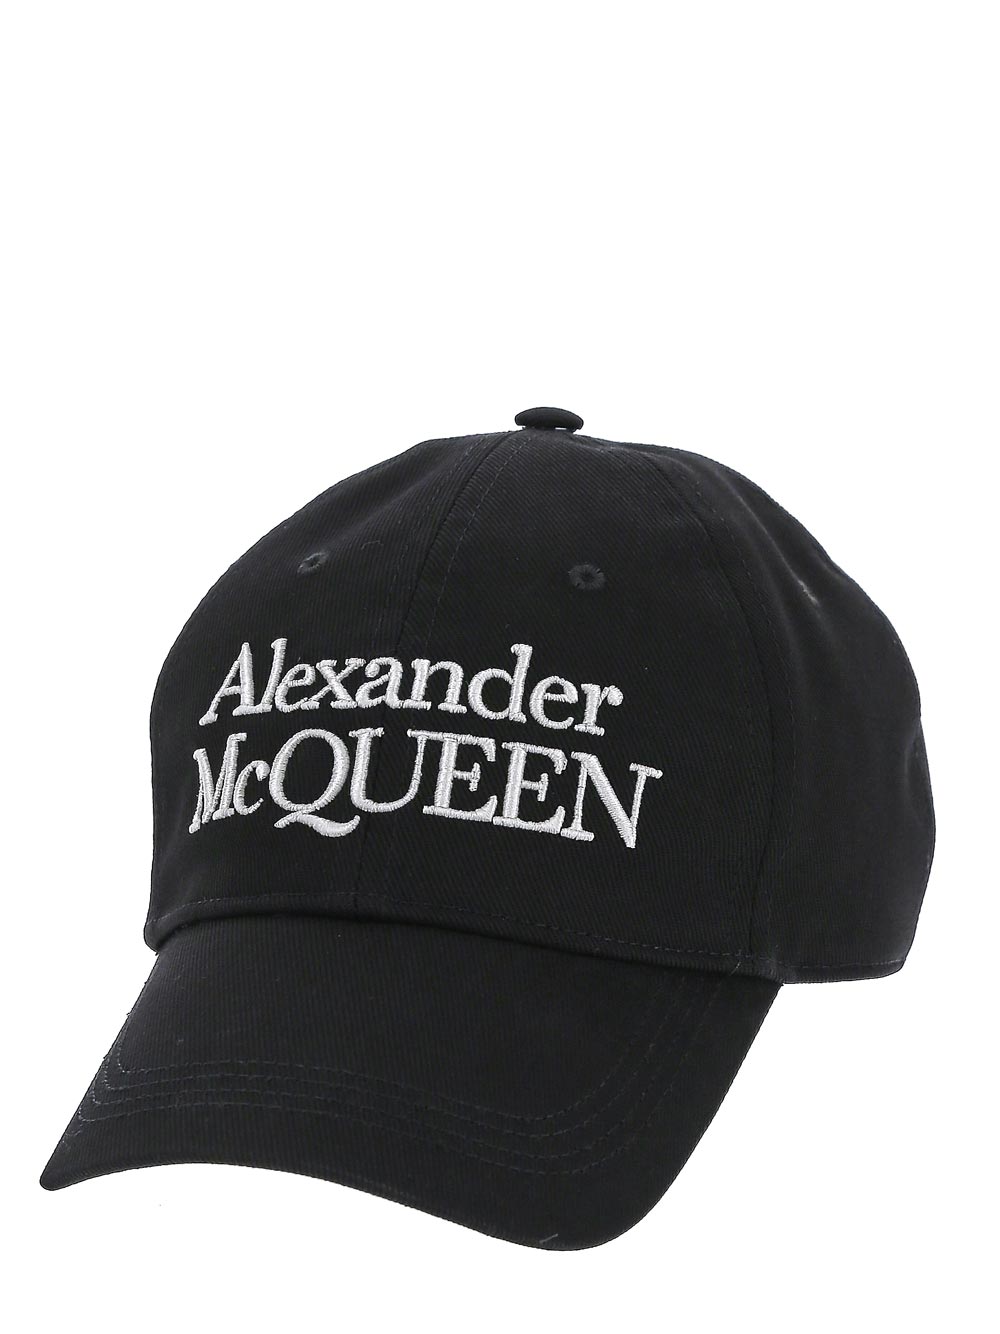 ALEXANDER McQUEEN Cap BLACK/WHITE